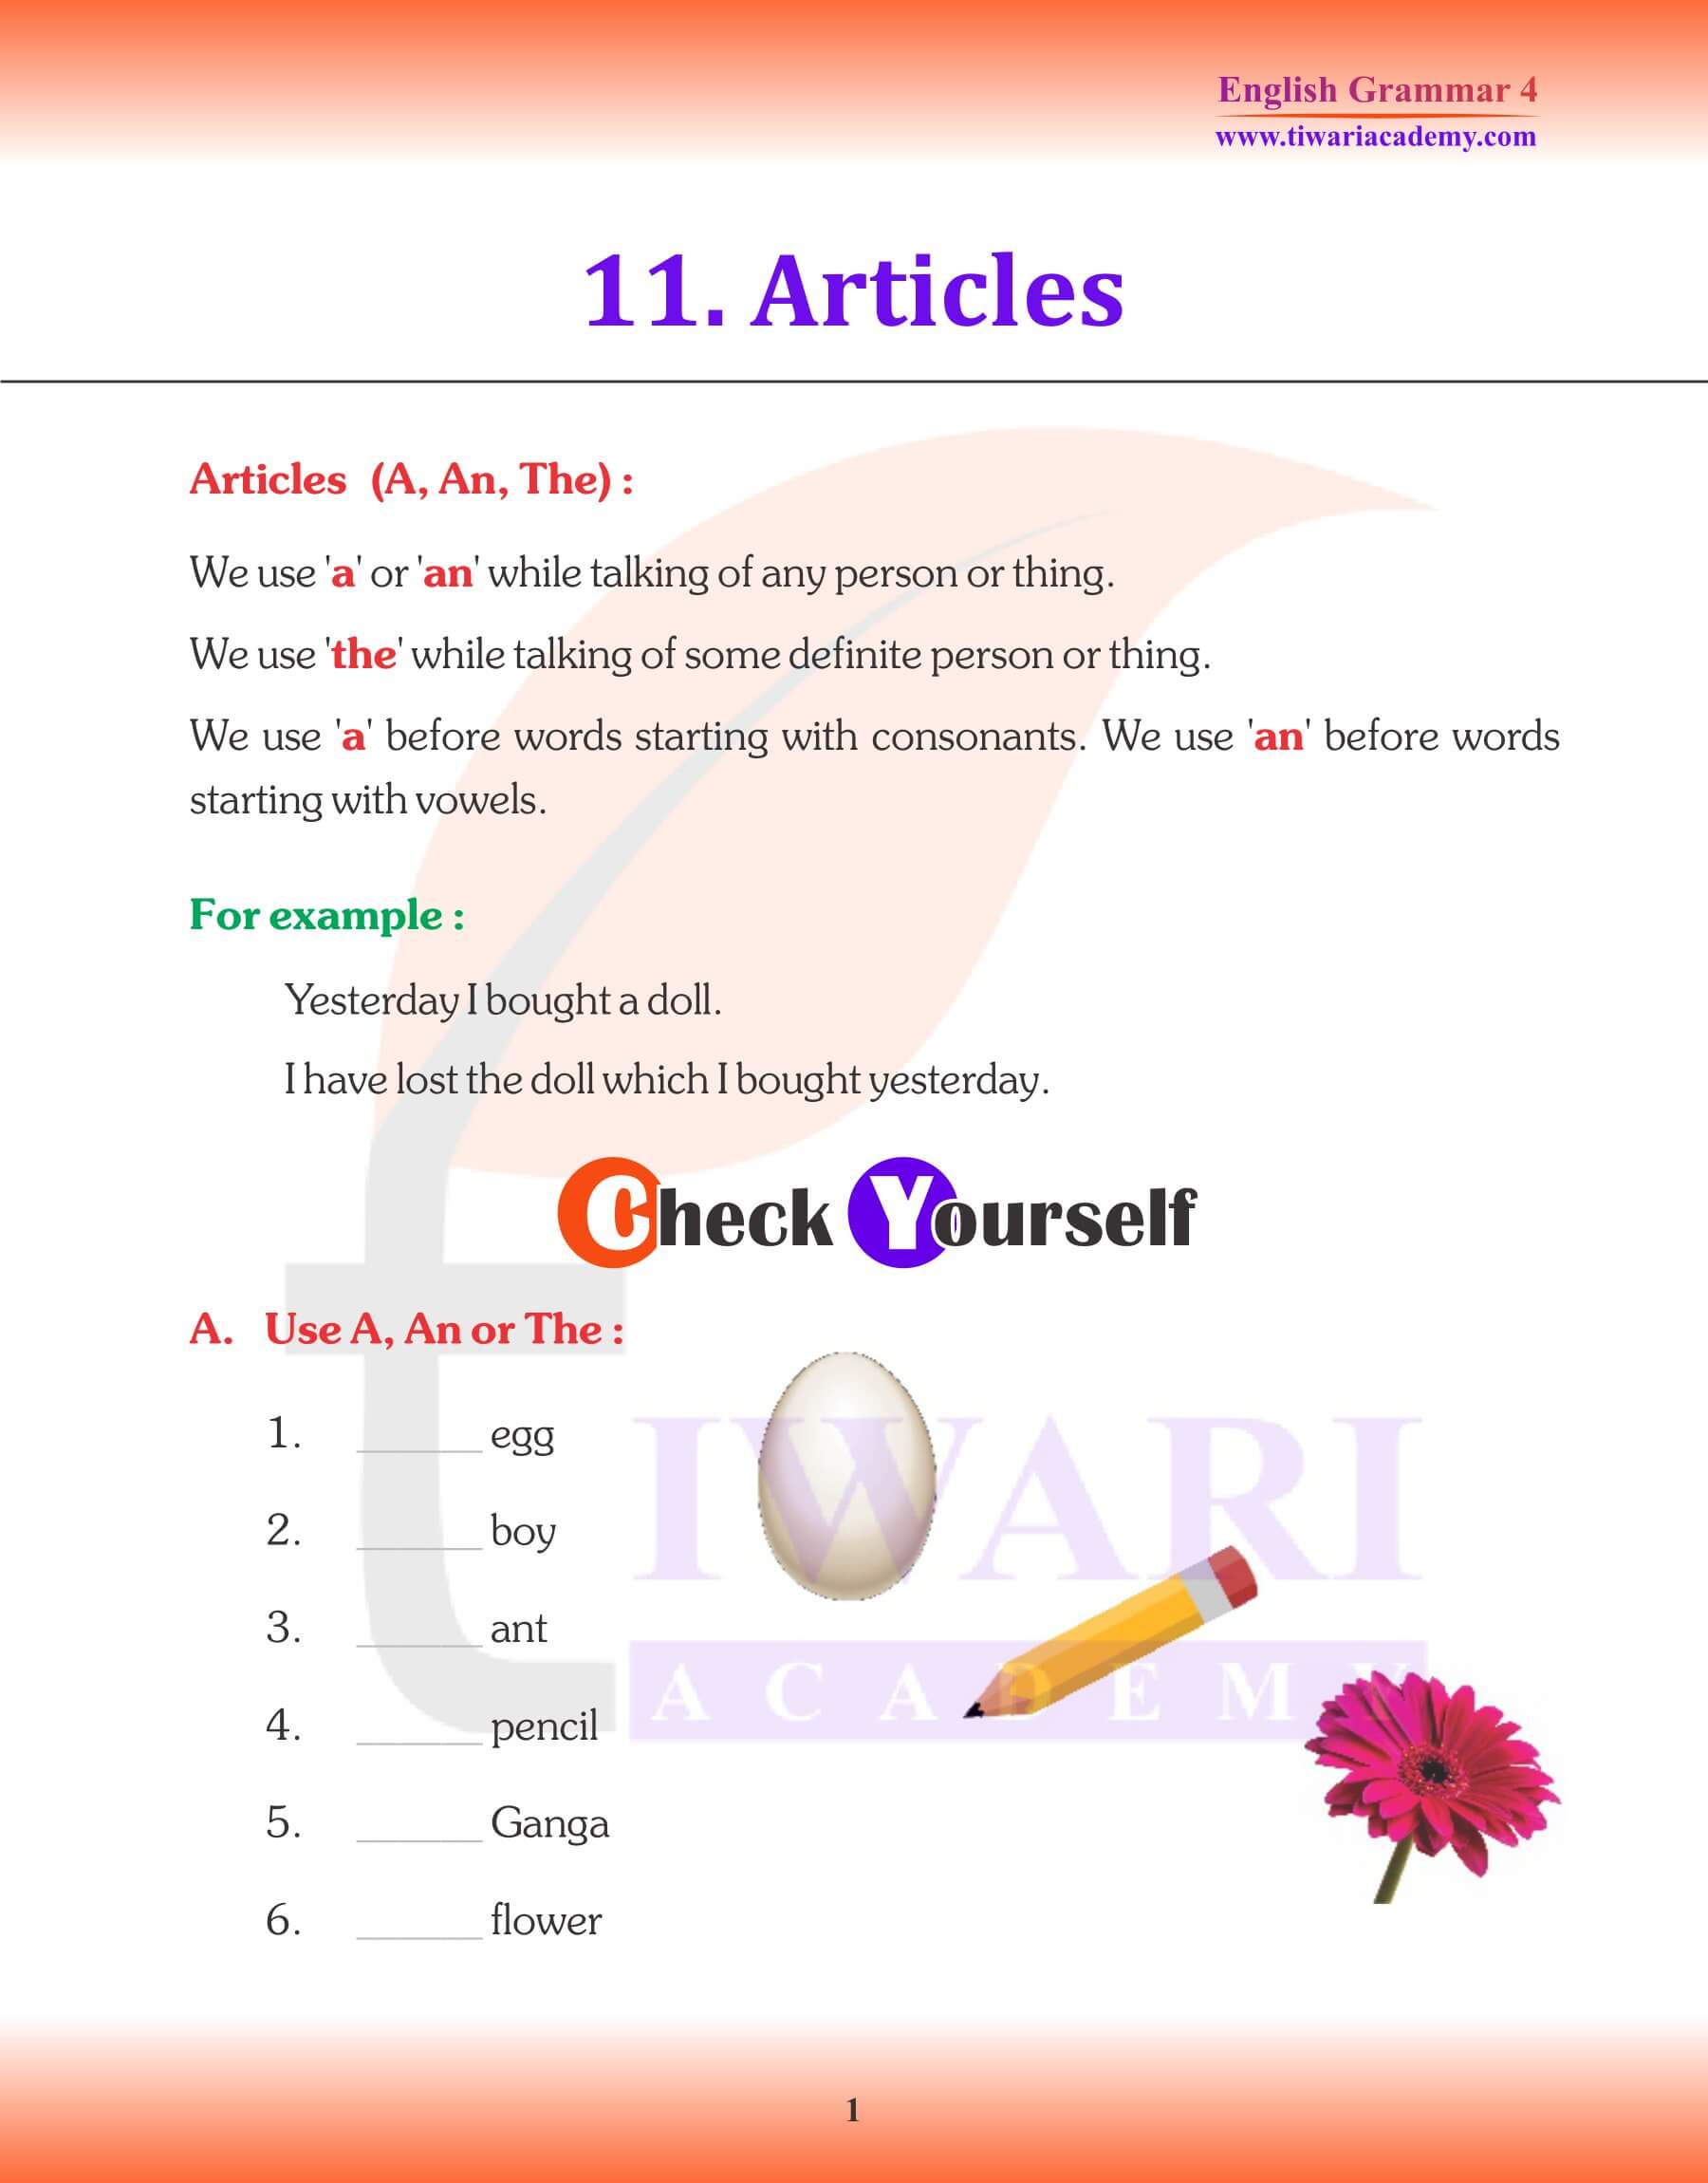 Class 4 English Grammar Articles Revision Book